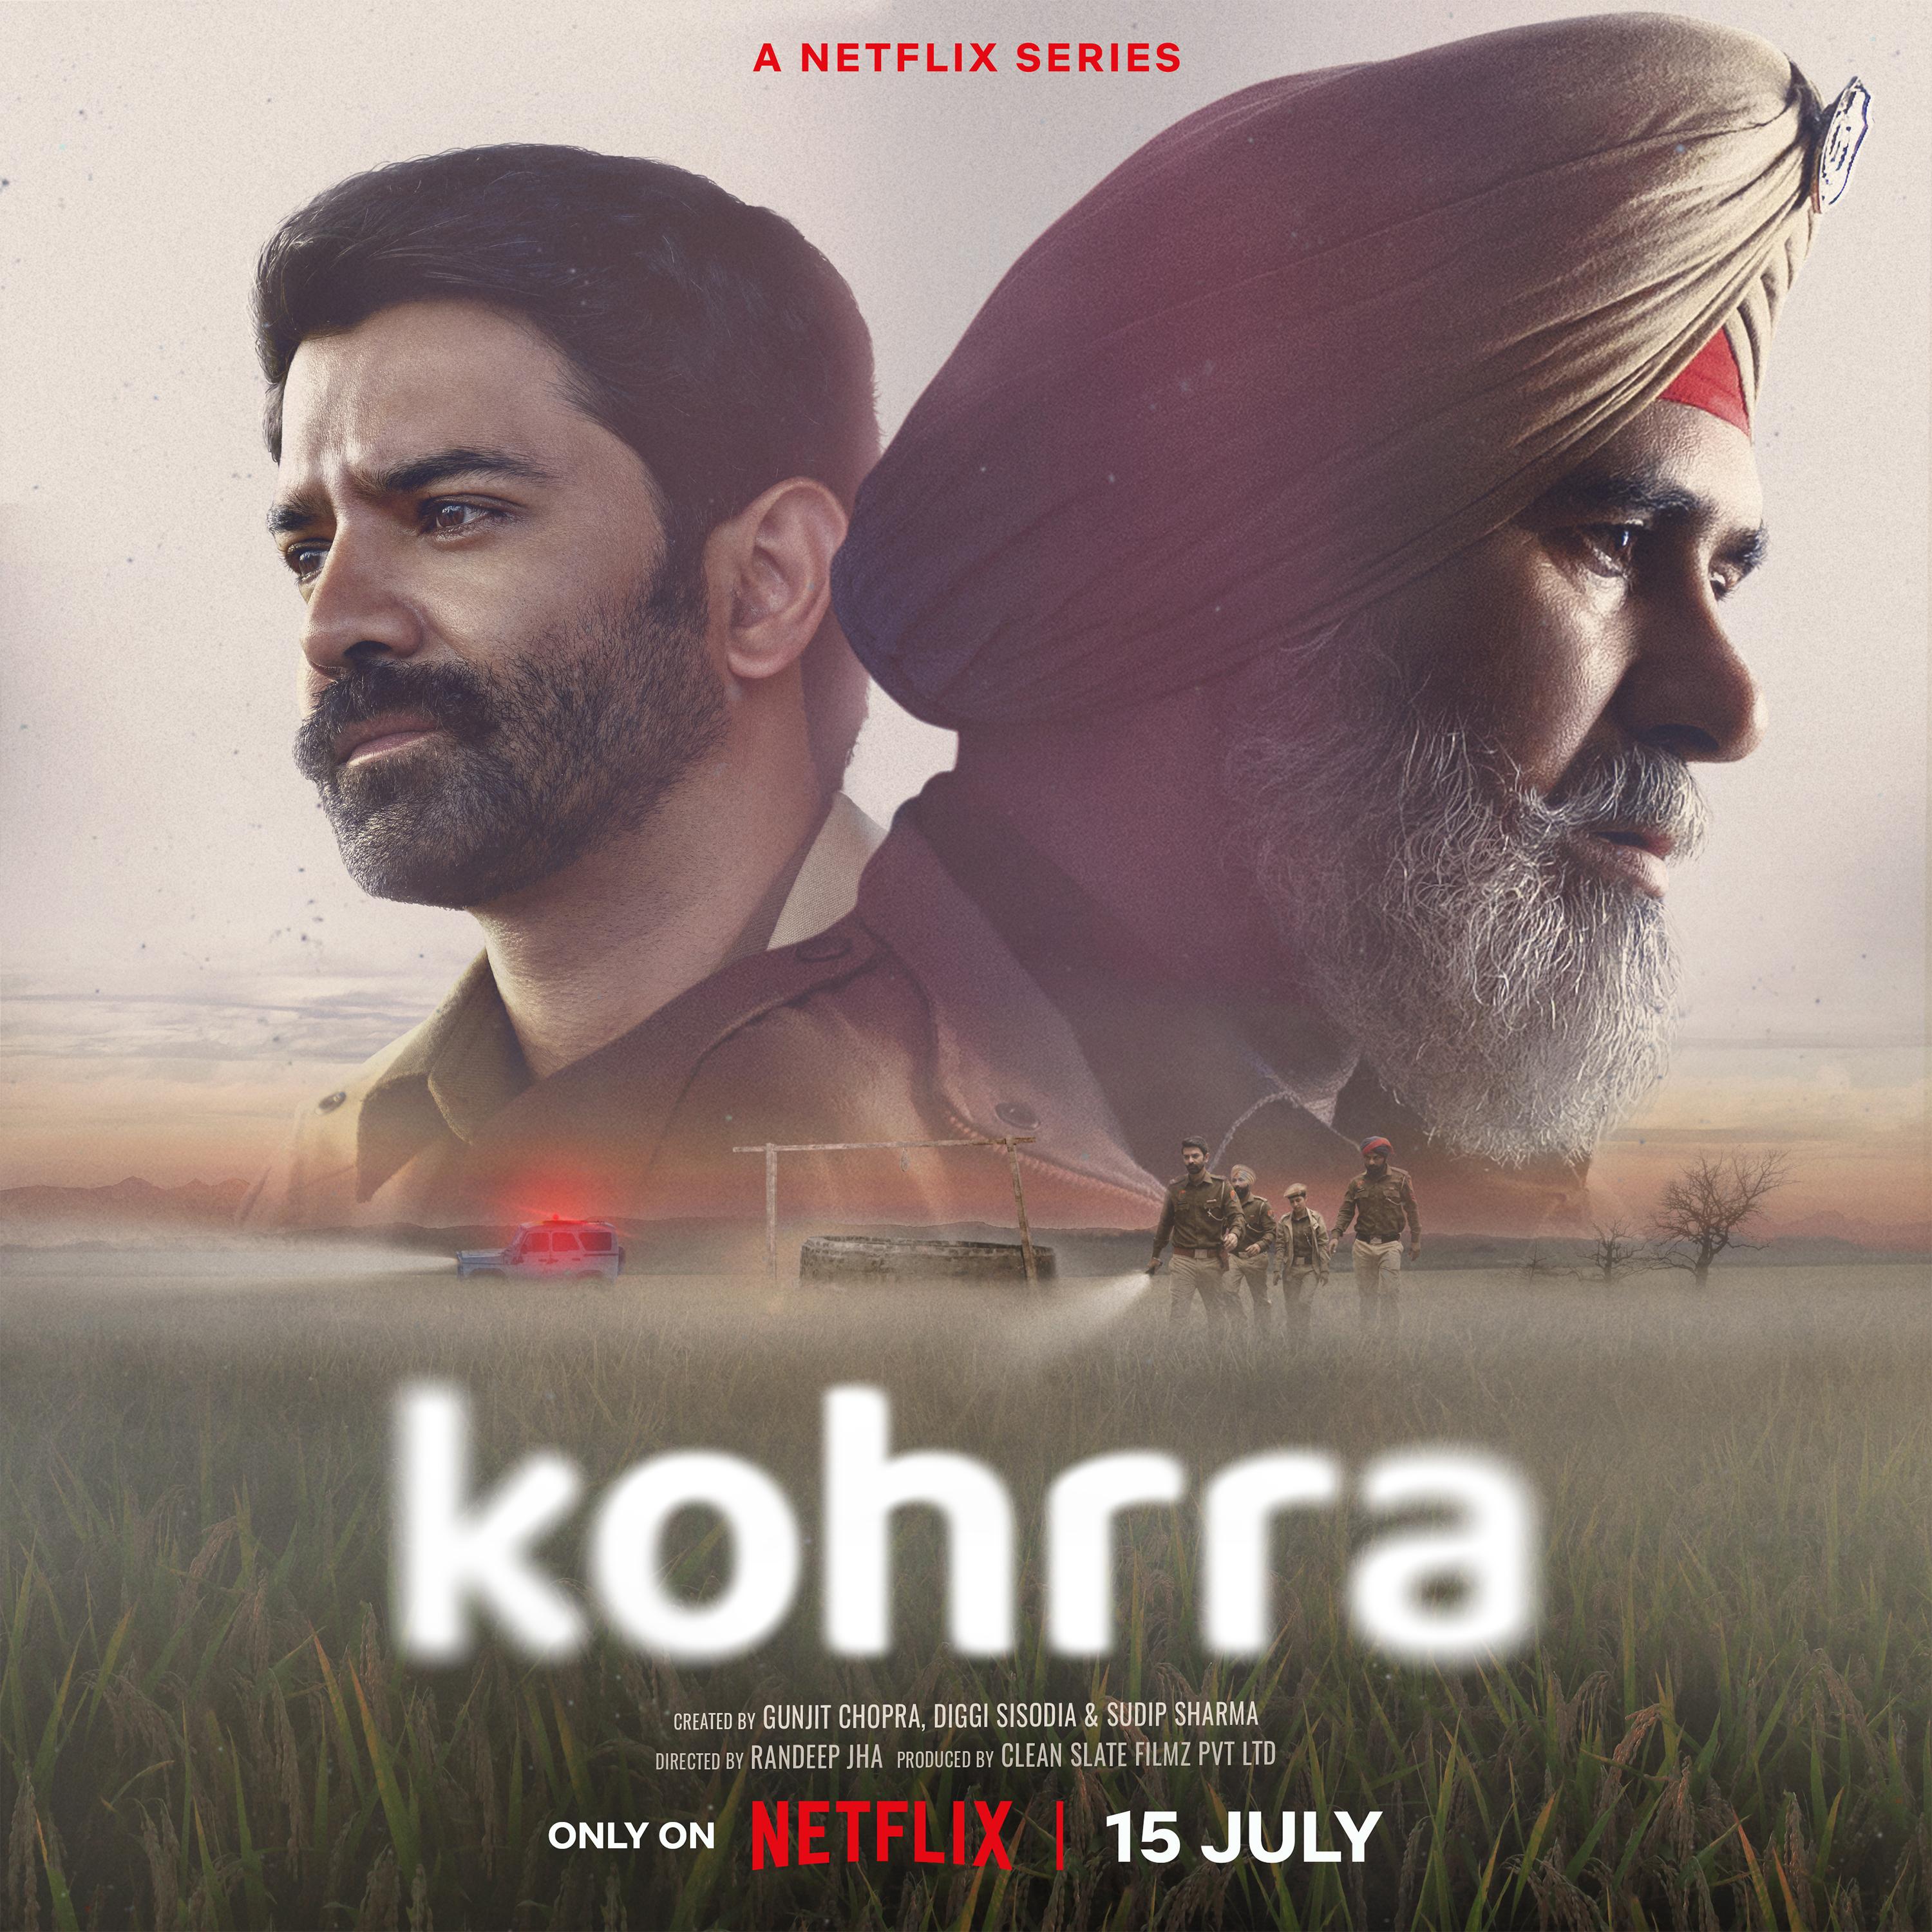 TV ratings for Kohrra (कोहरा) in India. Netflix TV series